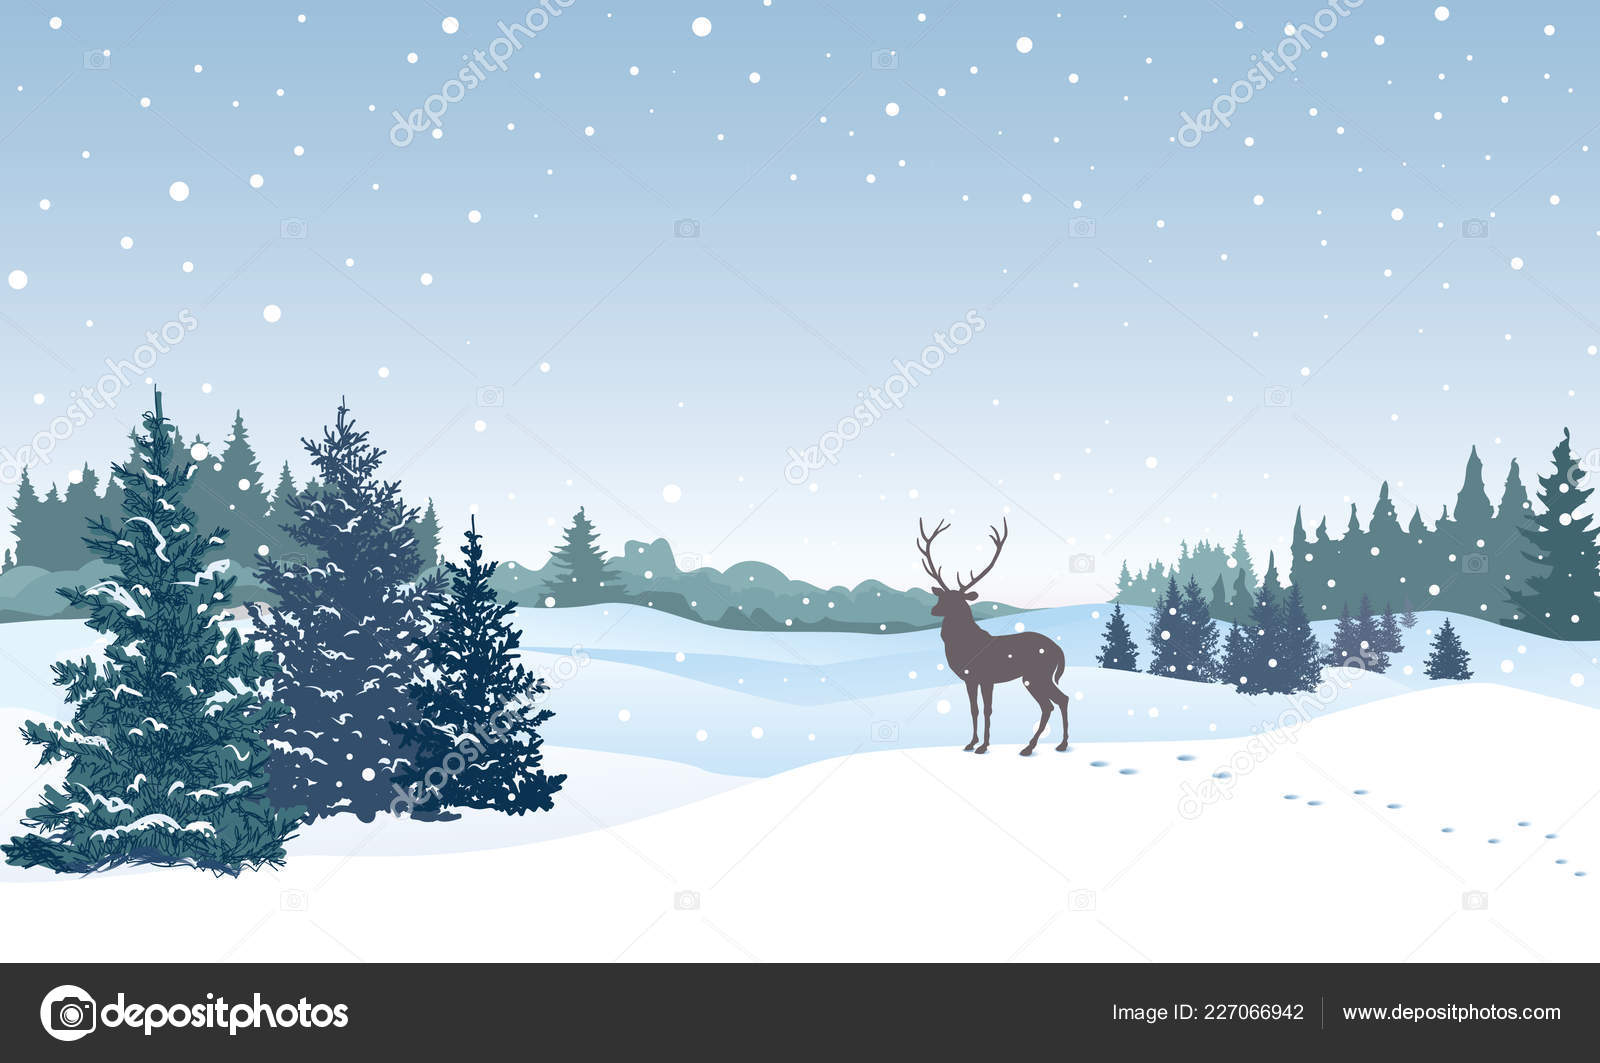 Christmas Background Snow Winter Landscape Deer Retro Merry Christmas Snowy Stock Image ©YokoDesign #227066942